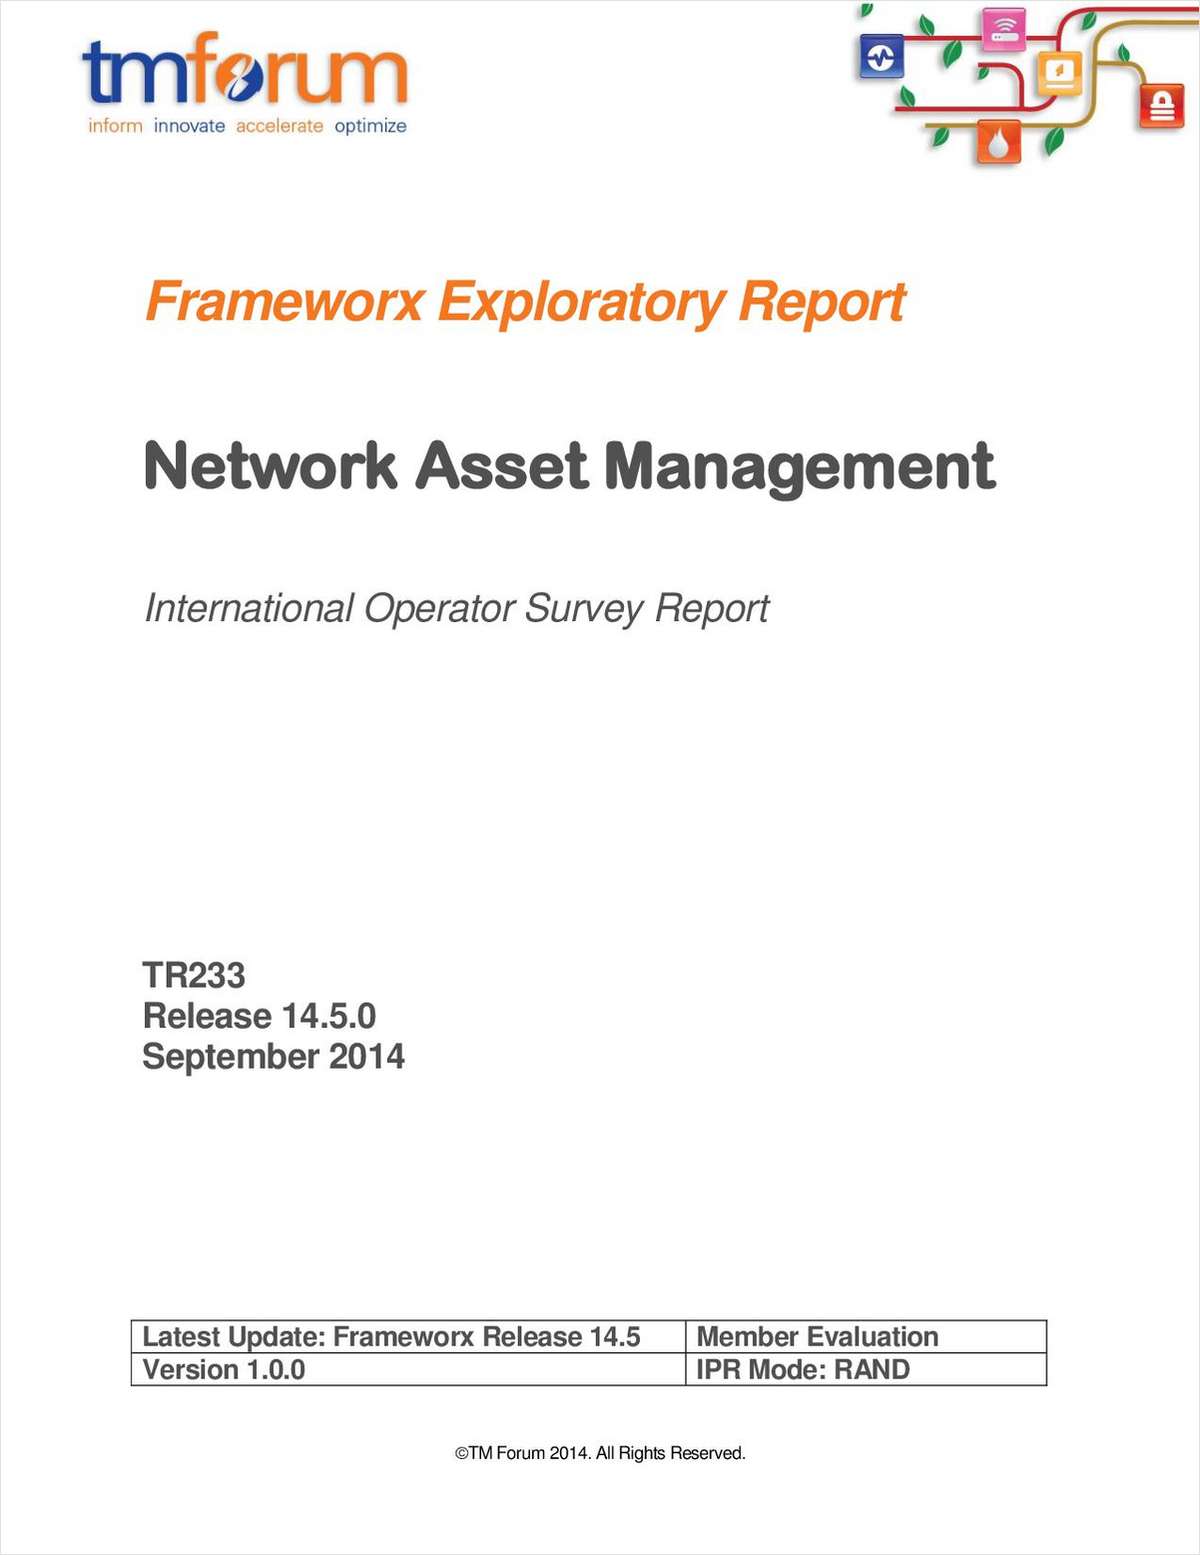 asset management research paper